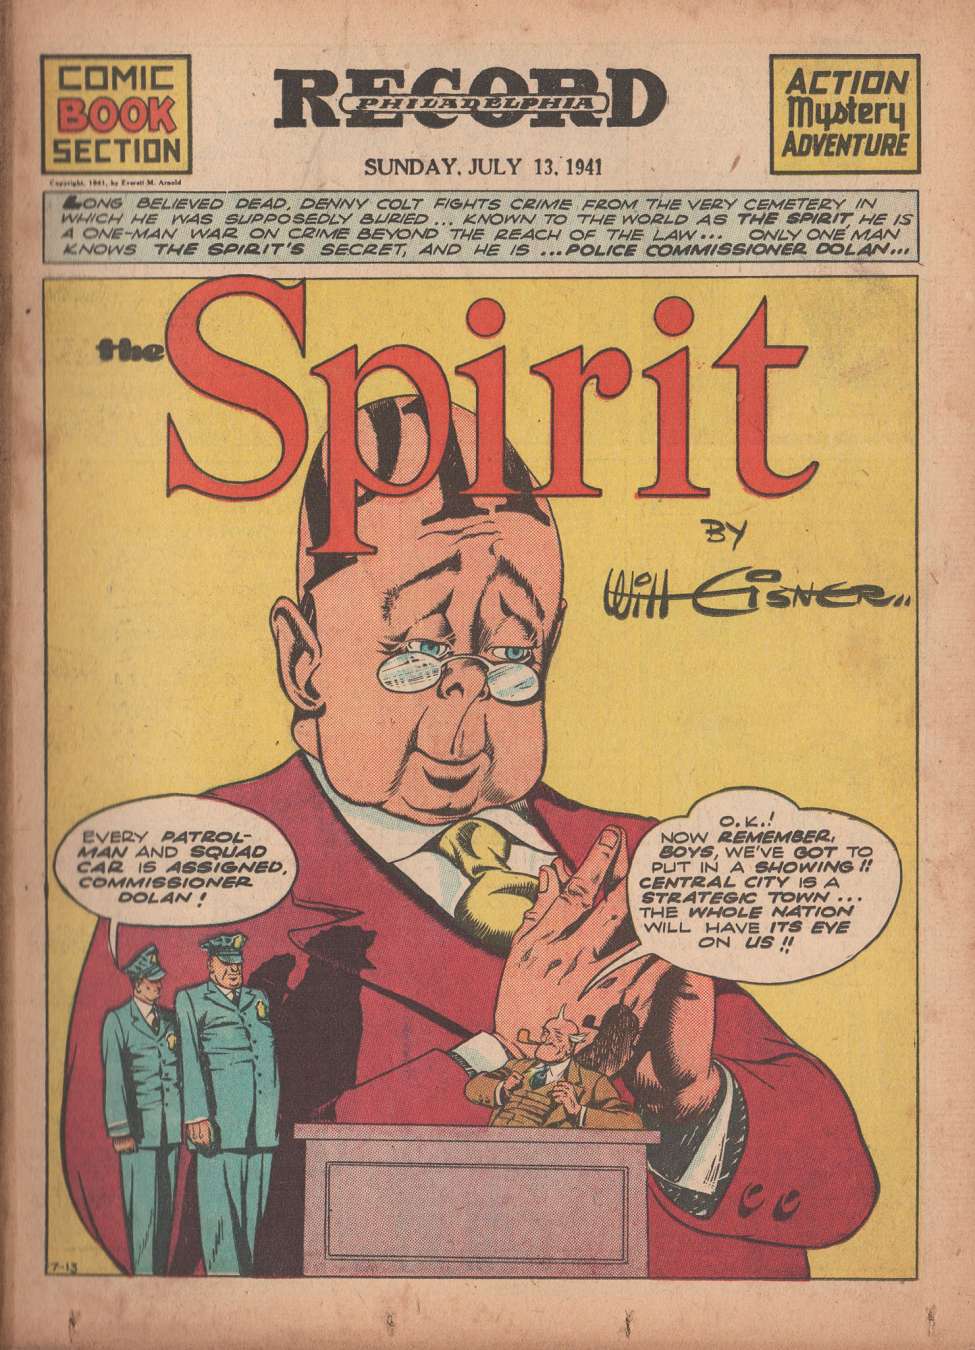 Comic Book Cover For The Spirit (1941-07-13) - Philadelphia Record